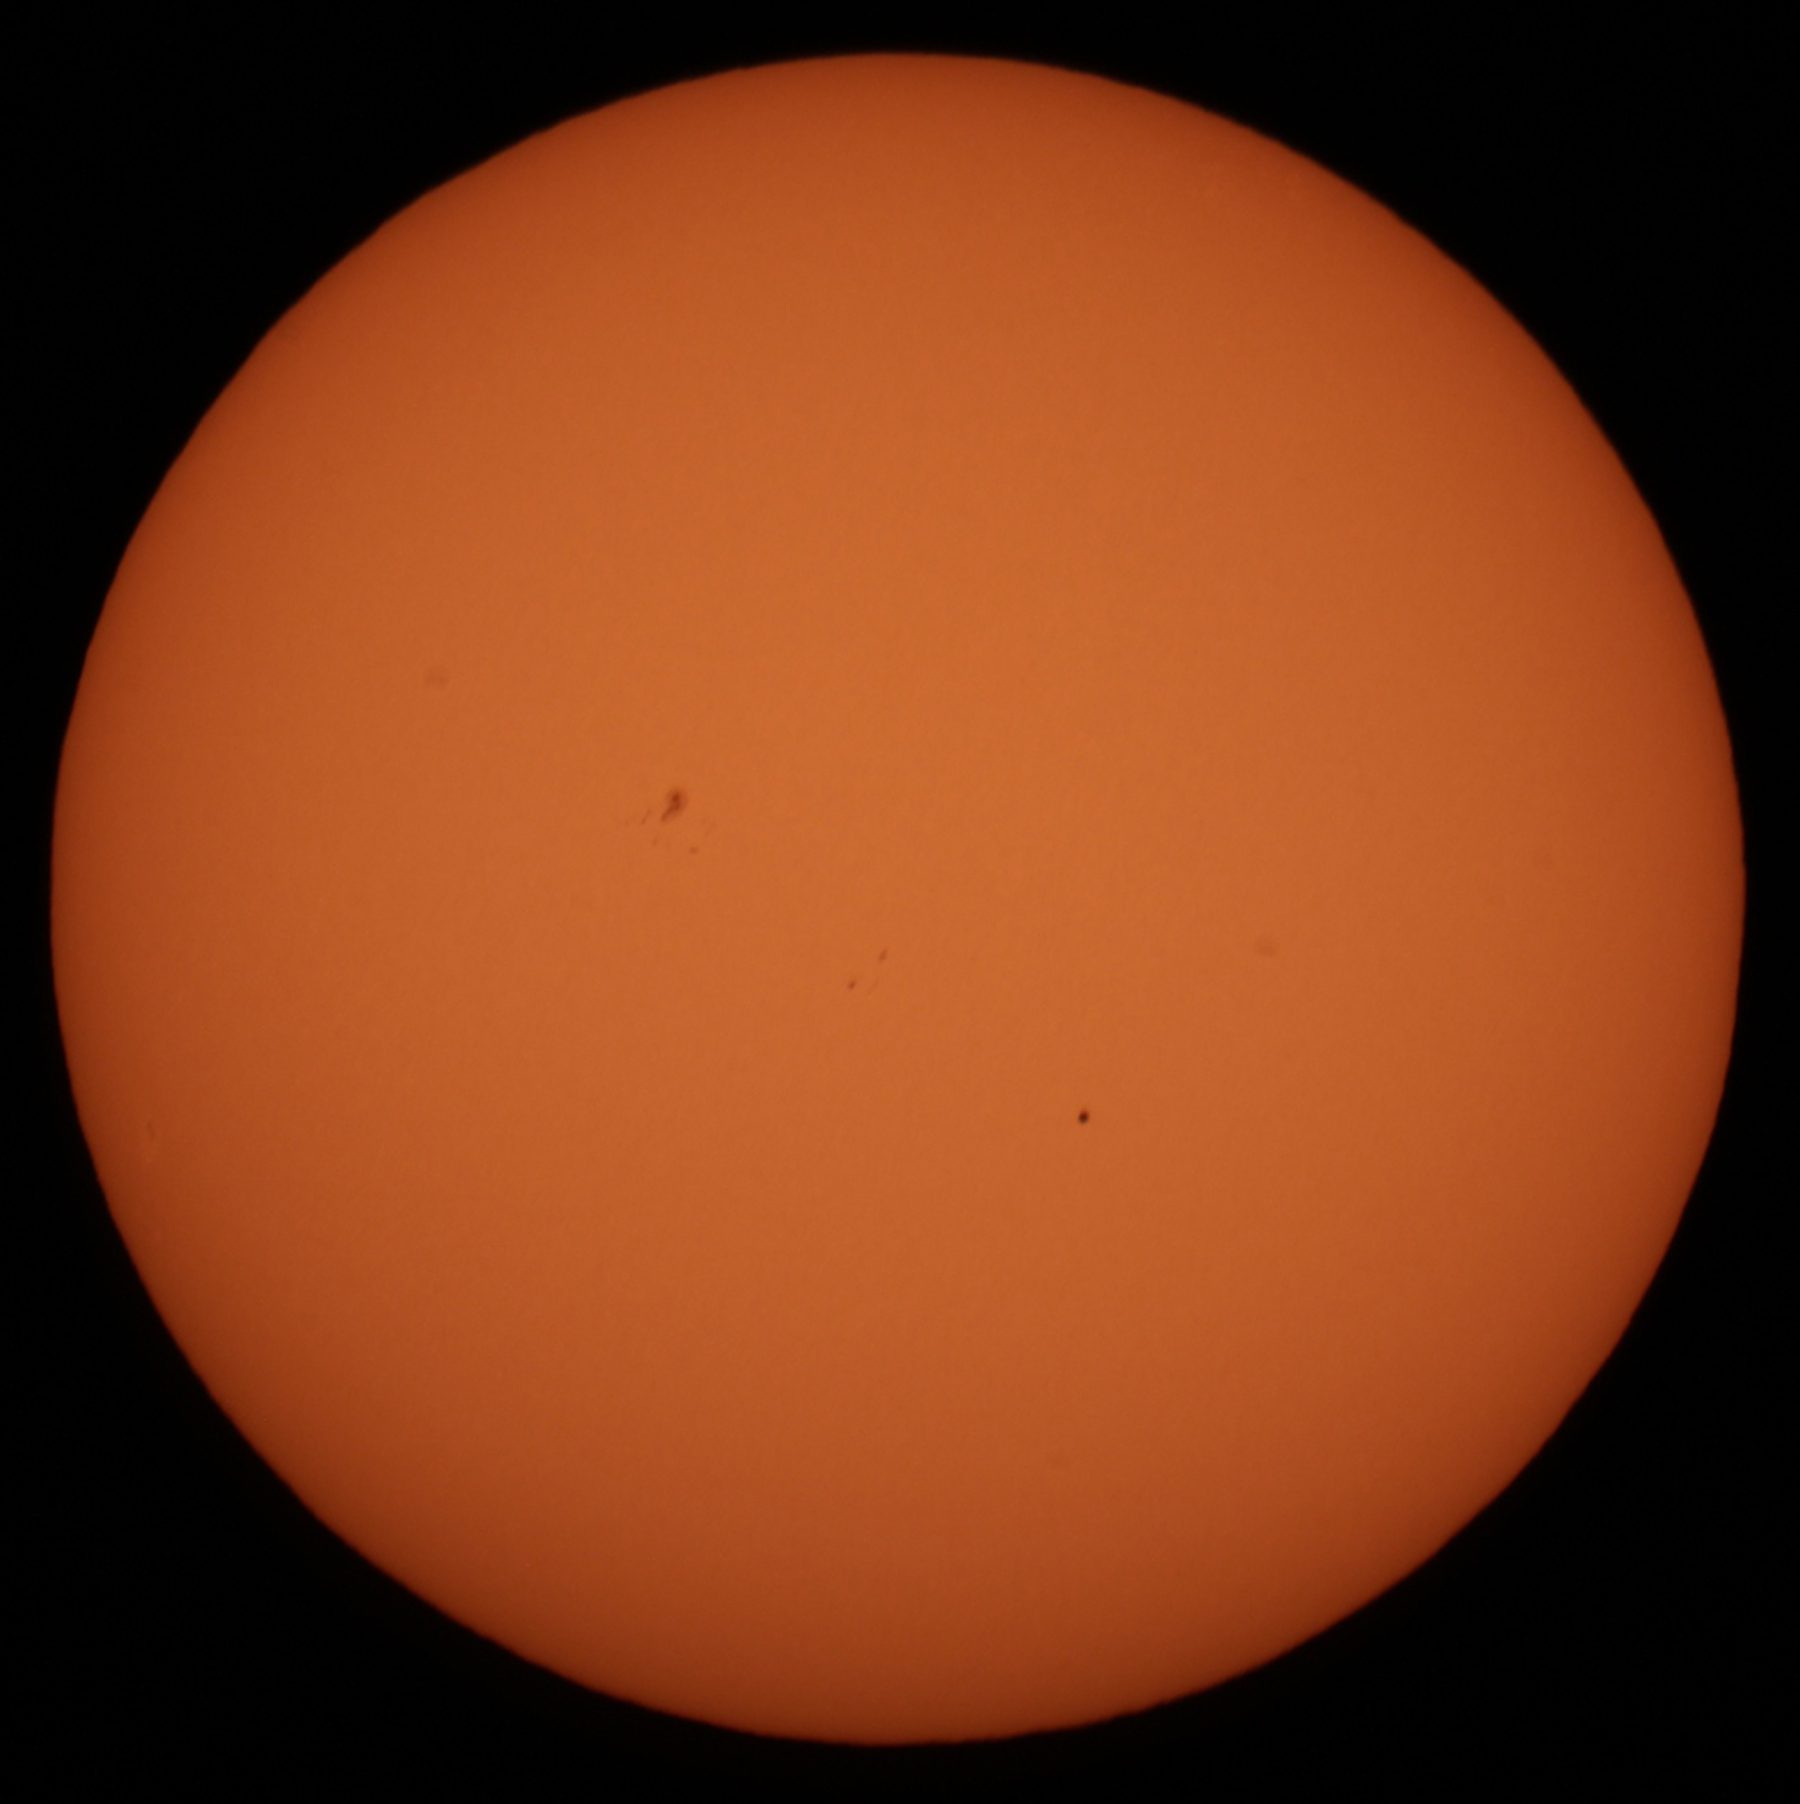 Mercury the messenger crosses the sun on Nov. 11